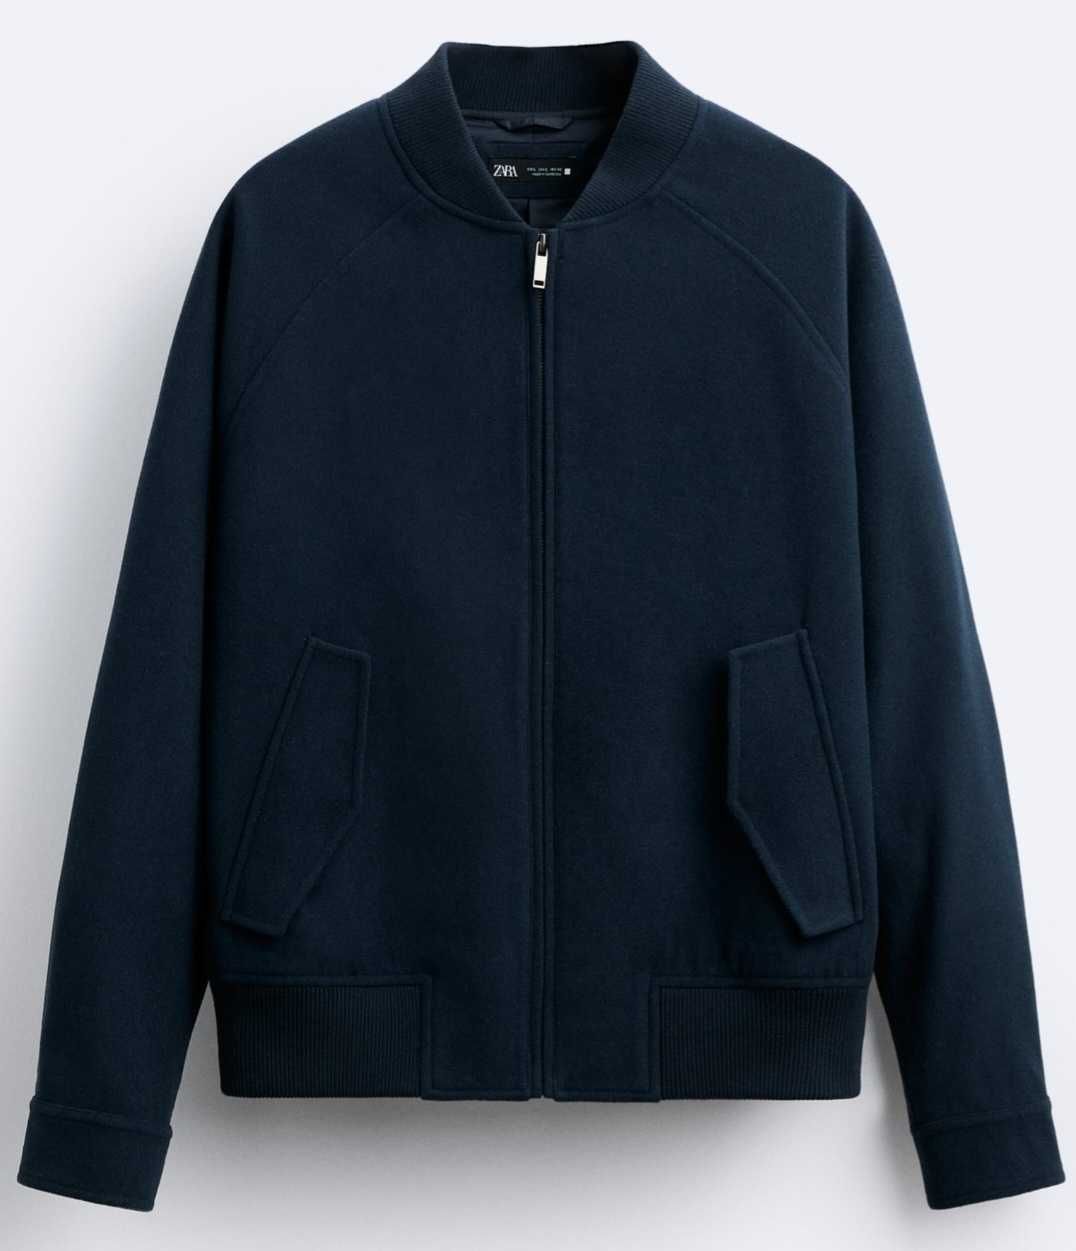 Куртка-бомбер из  шерсти, бренд Zara, М и L размер, темно-синий